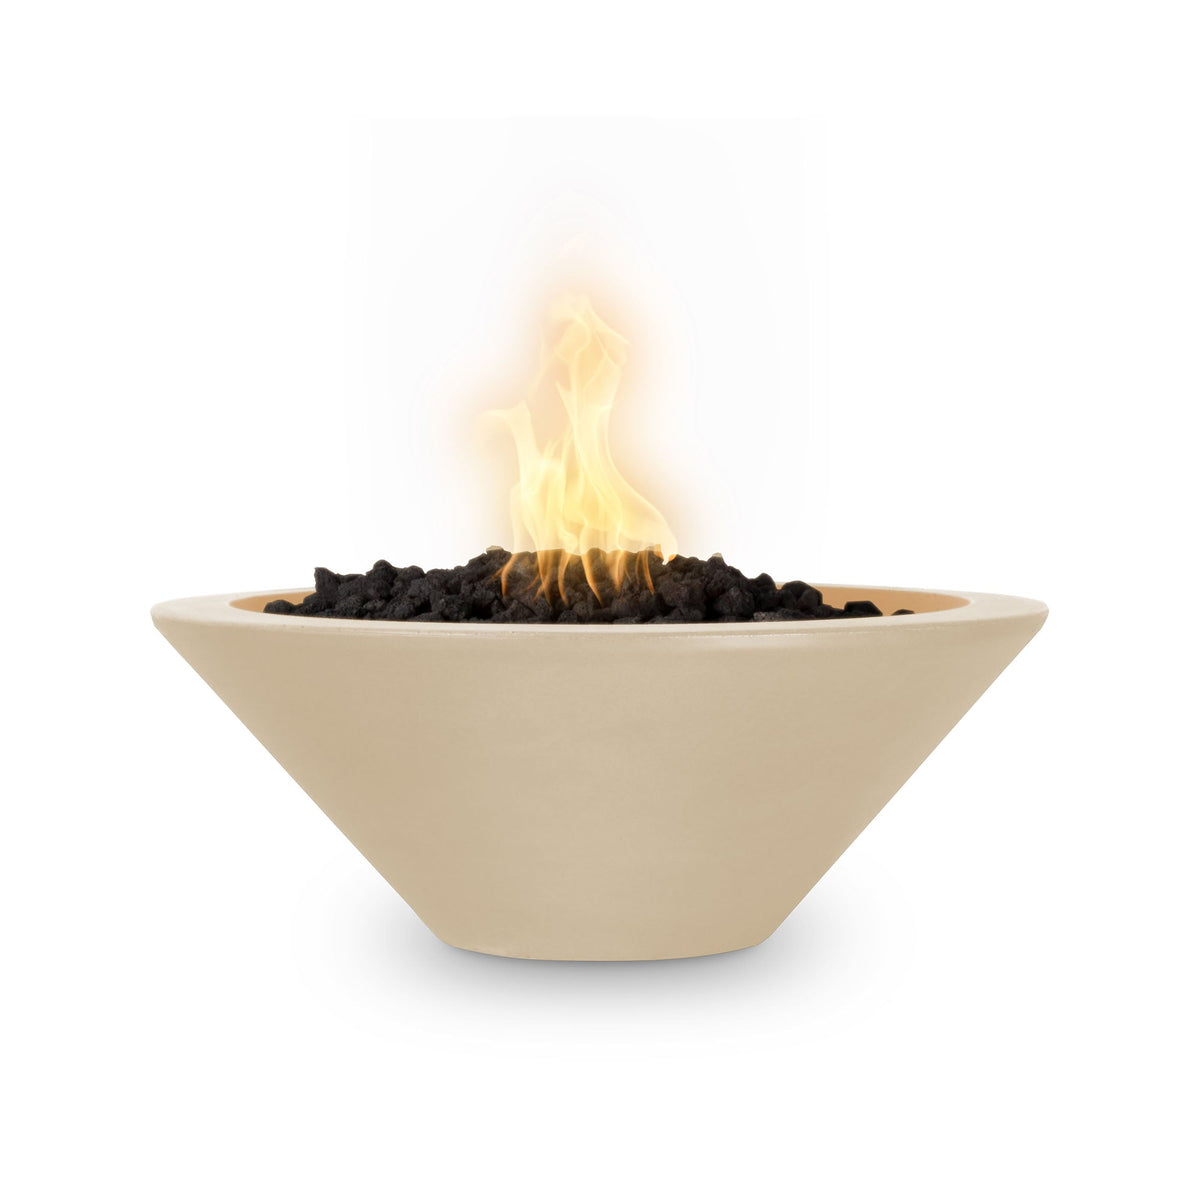 The Outdoor Plus 48&quot; Cazo GFRC Concrete Round Fire Bowl in Vanilla